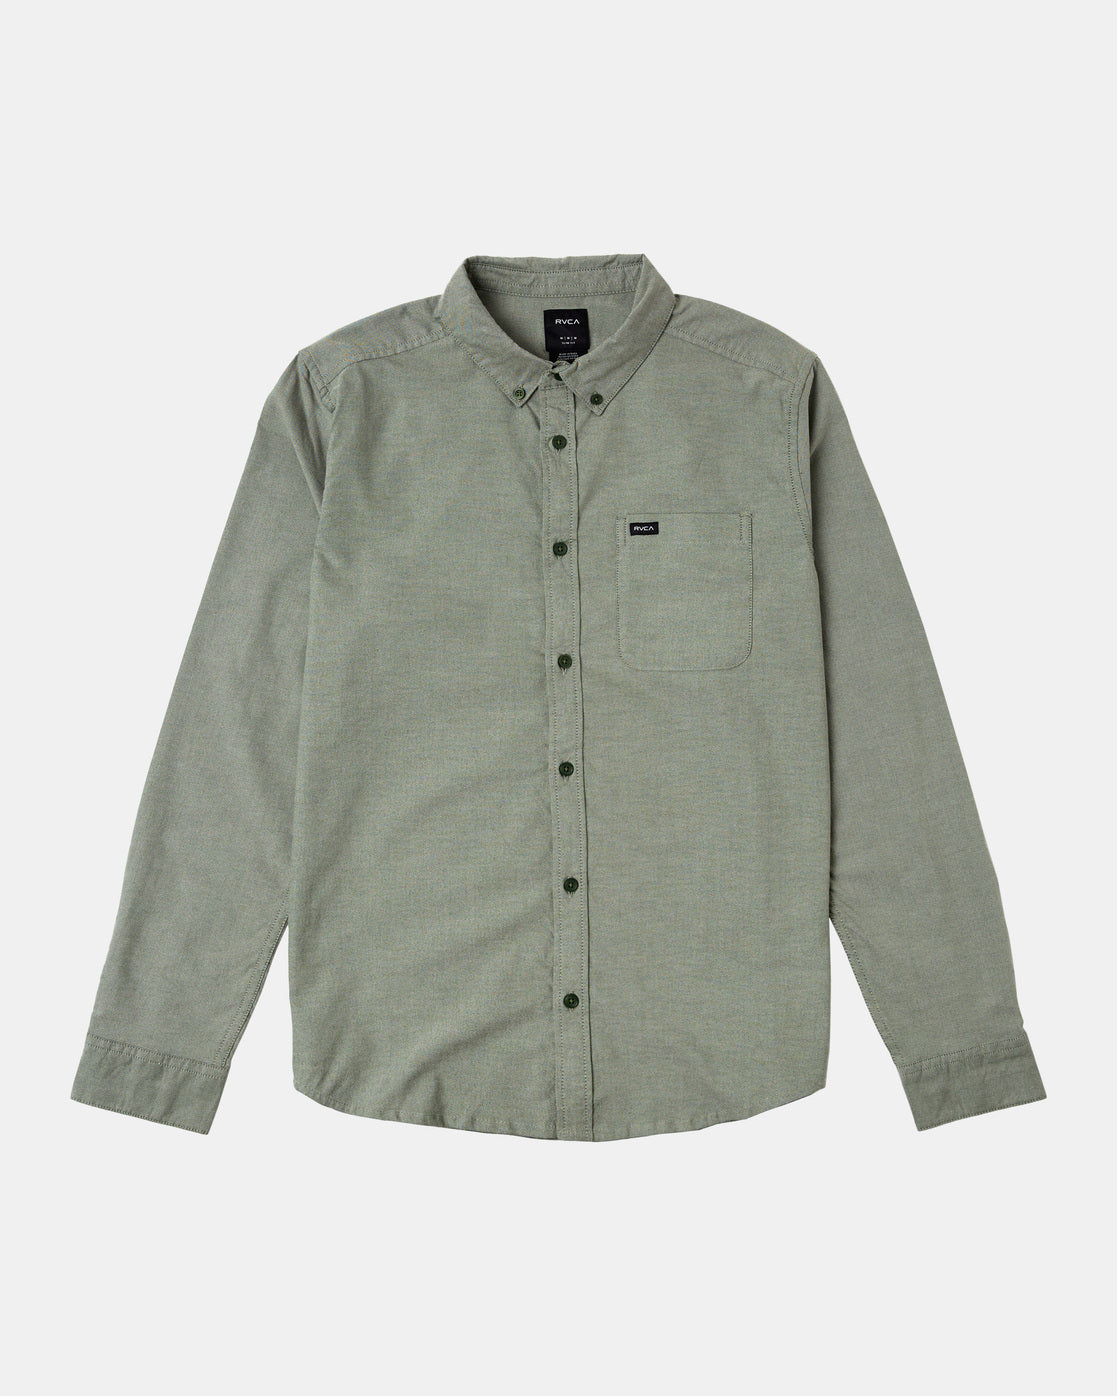  RVCA Men's Slim FIT Long Sleeve Woven Button UP Shirt